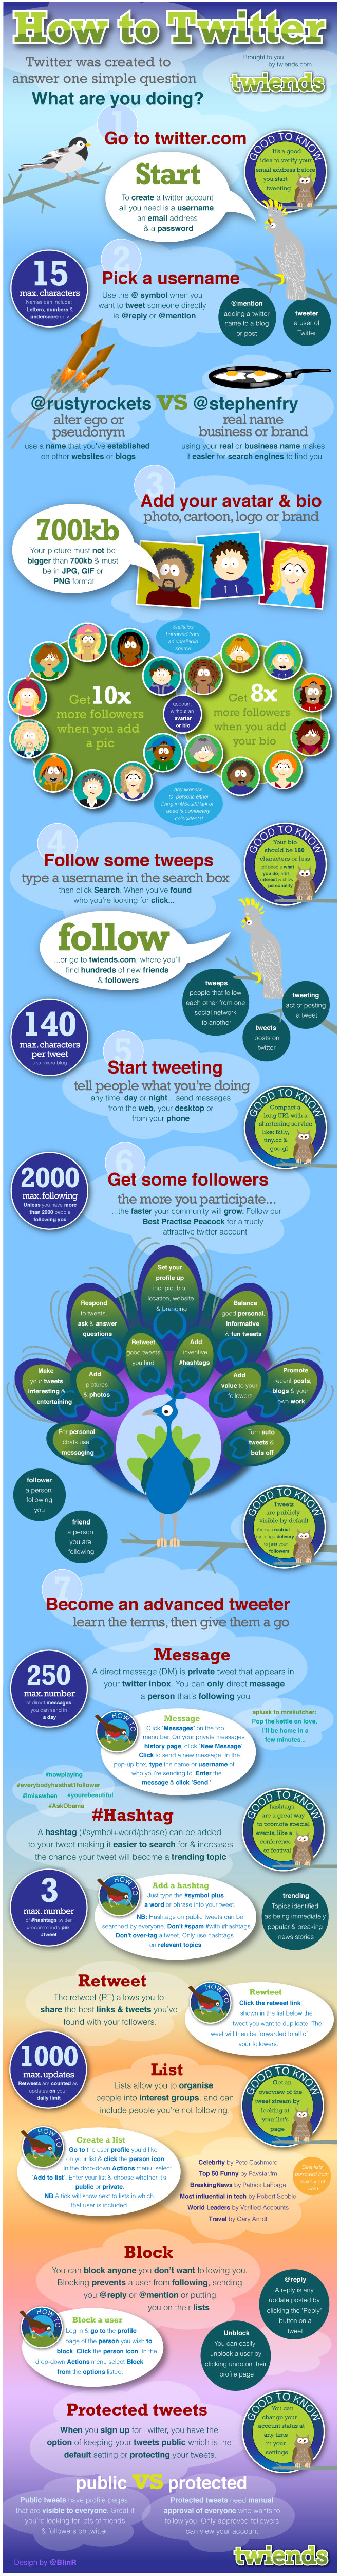 Twitter Marketing Infographic